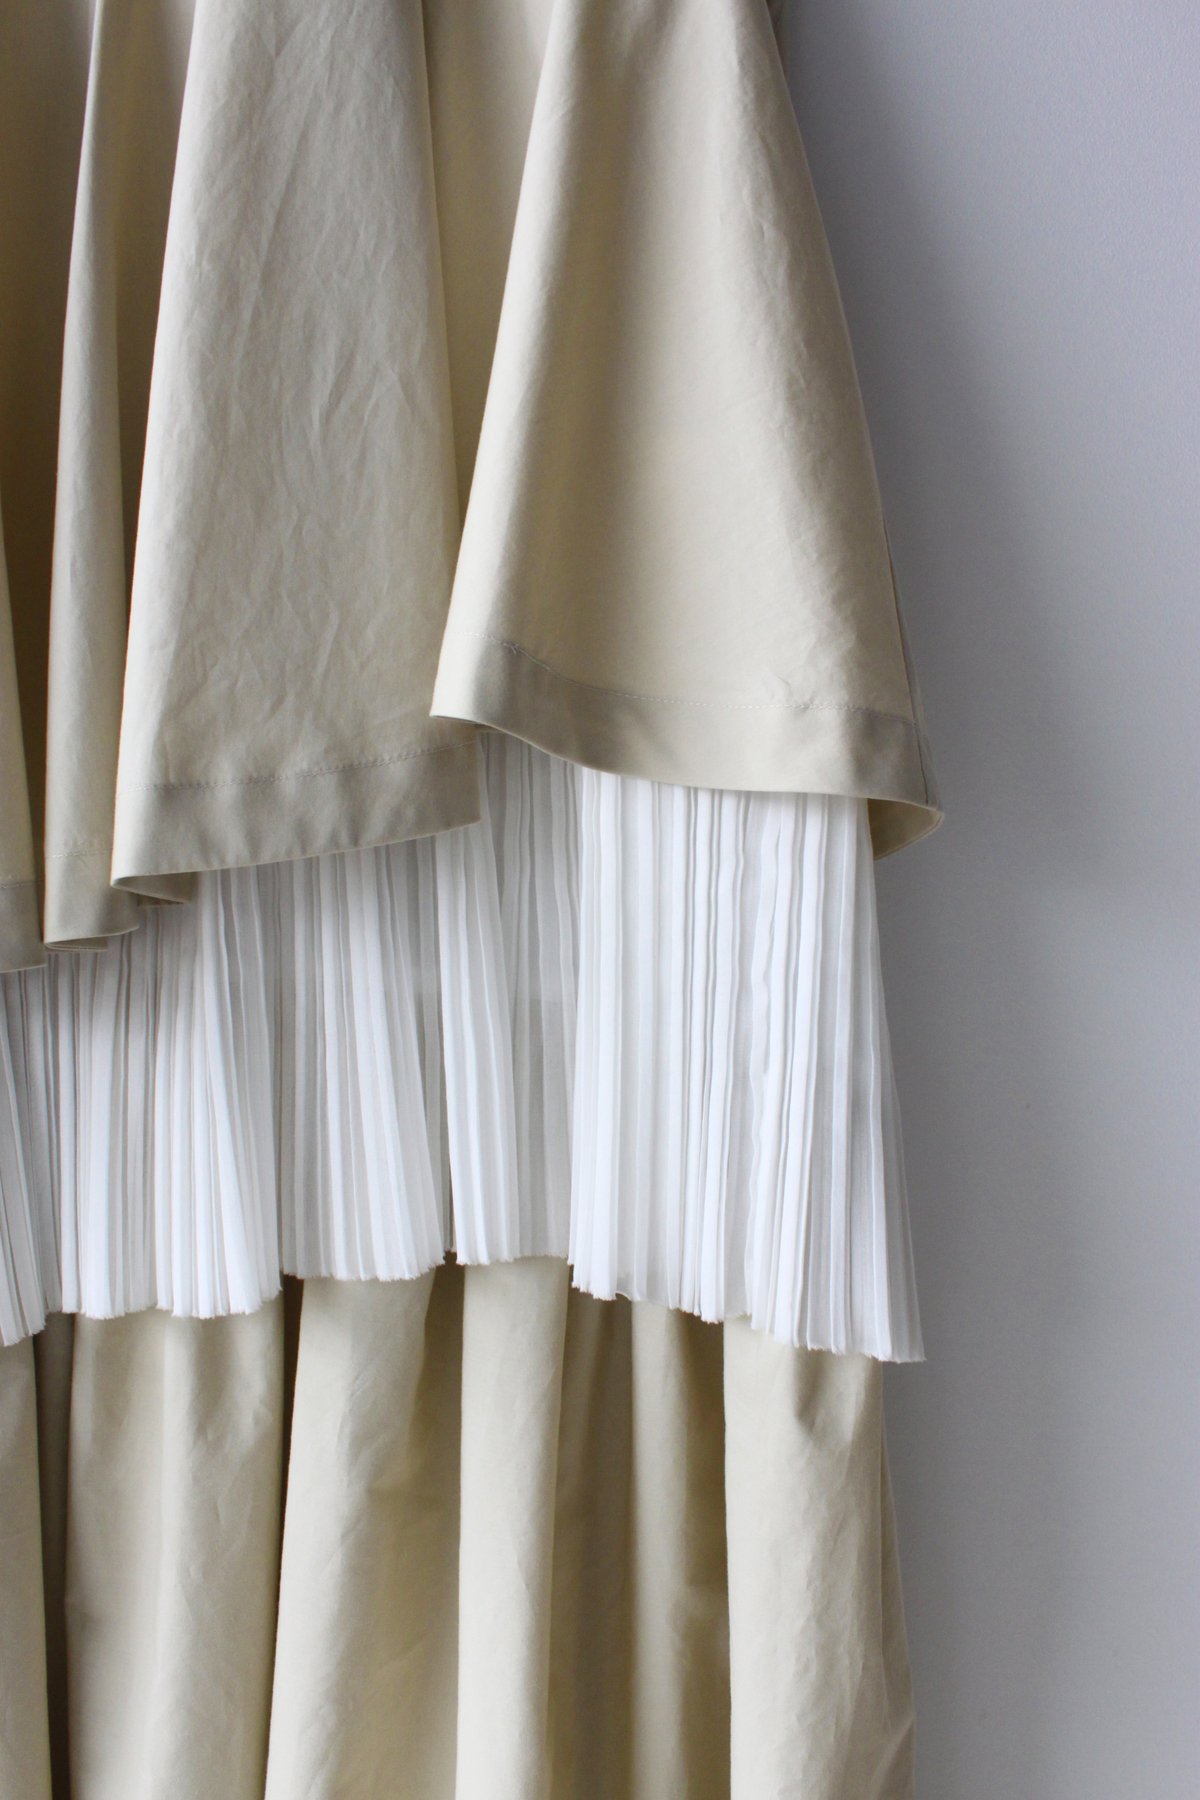 NEW SEASON- Cotton tiered pleated dress